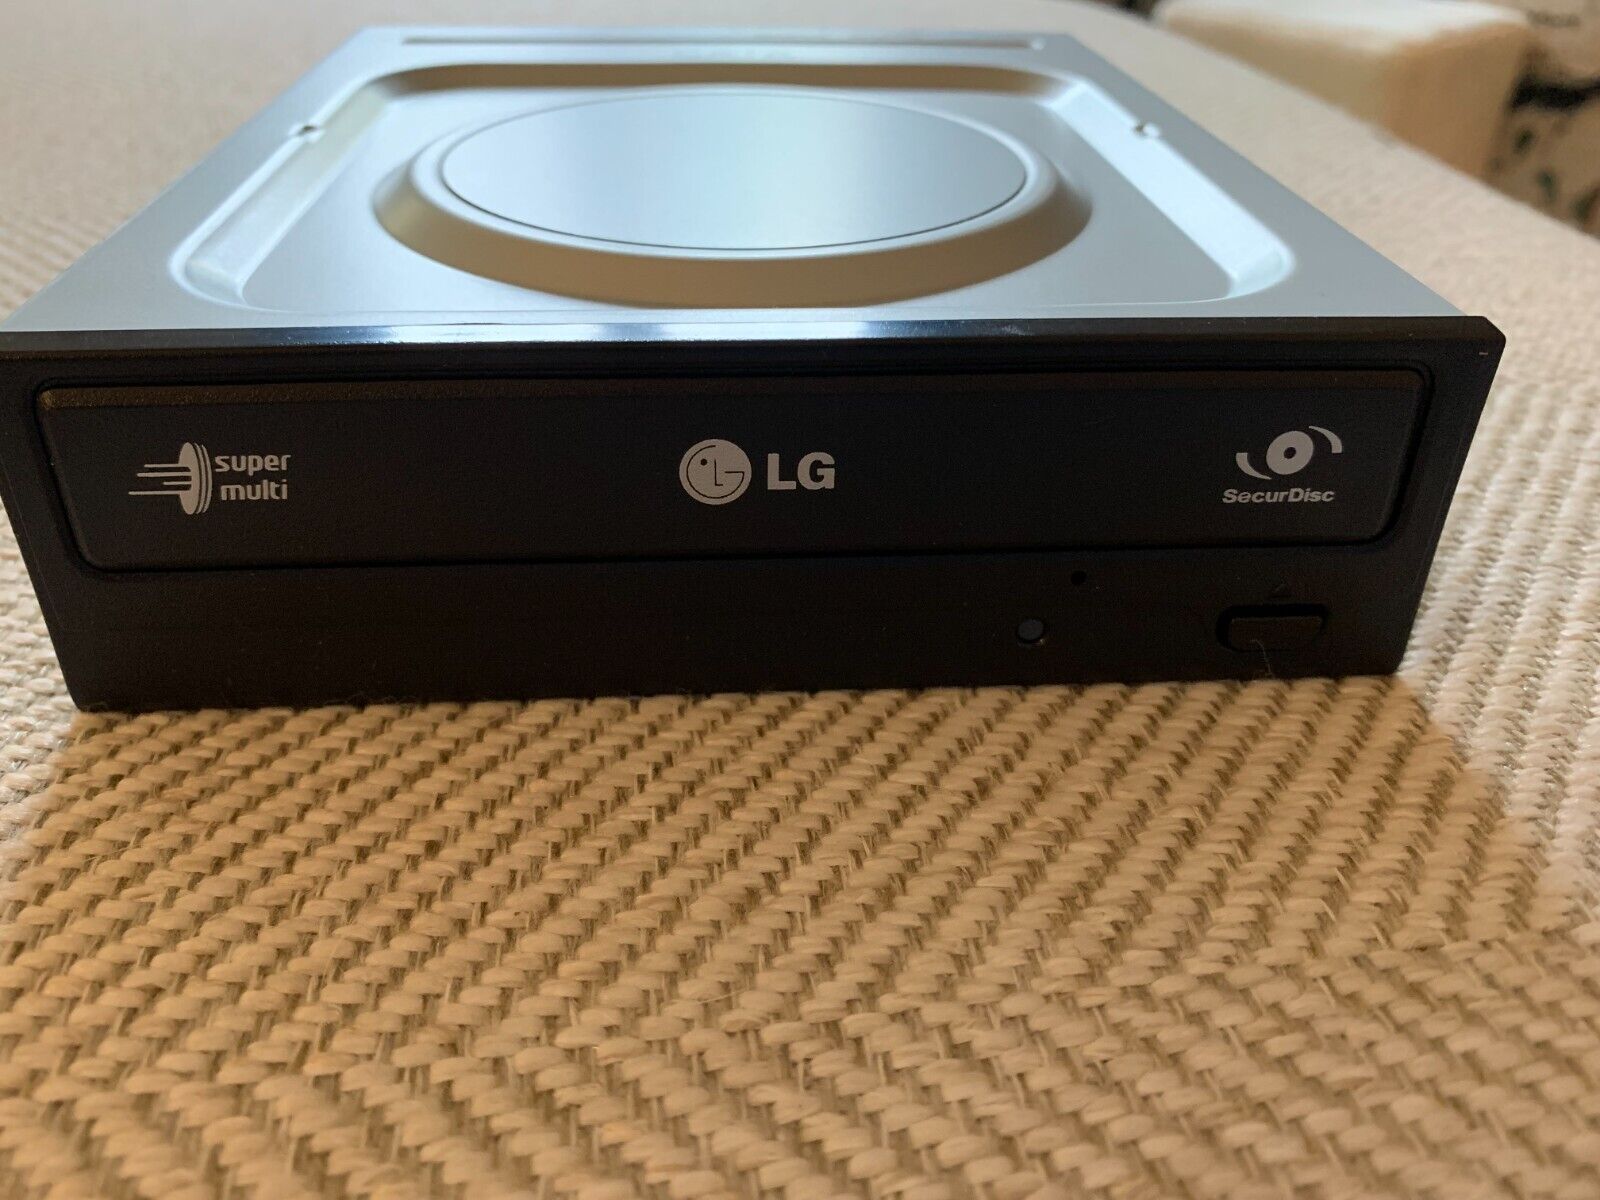 LG GH22NS30 SUPER MULTI DVD REWRITER SATA. 30 day warranty.